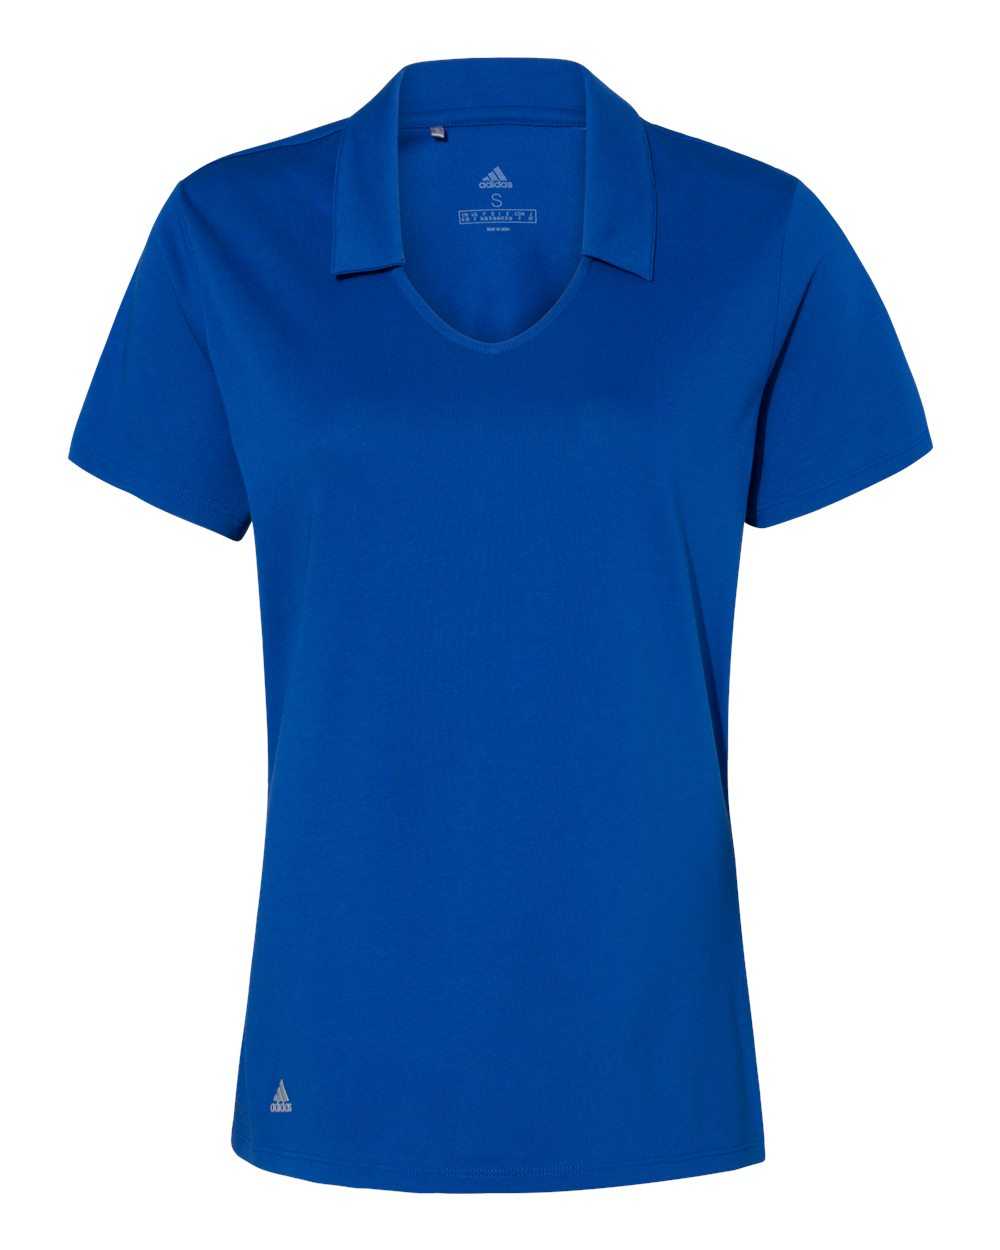 Adidas A323 Women's Cotton Blend Sport Shirt - Collegiate Royal - HIT a Double